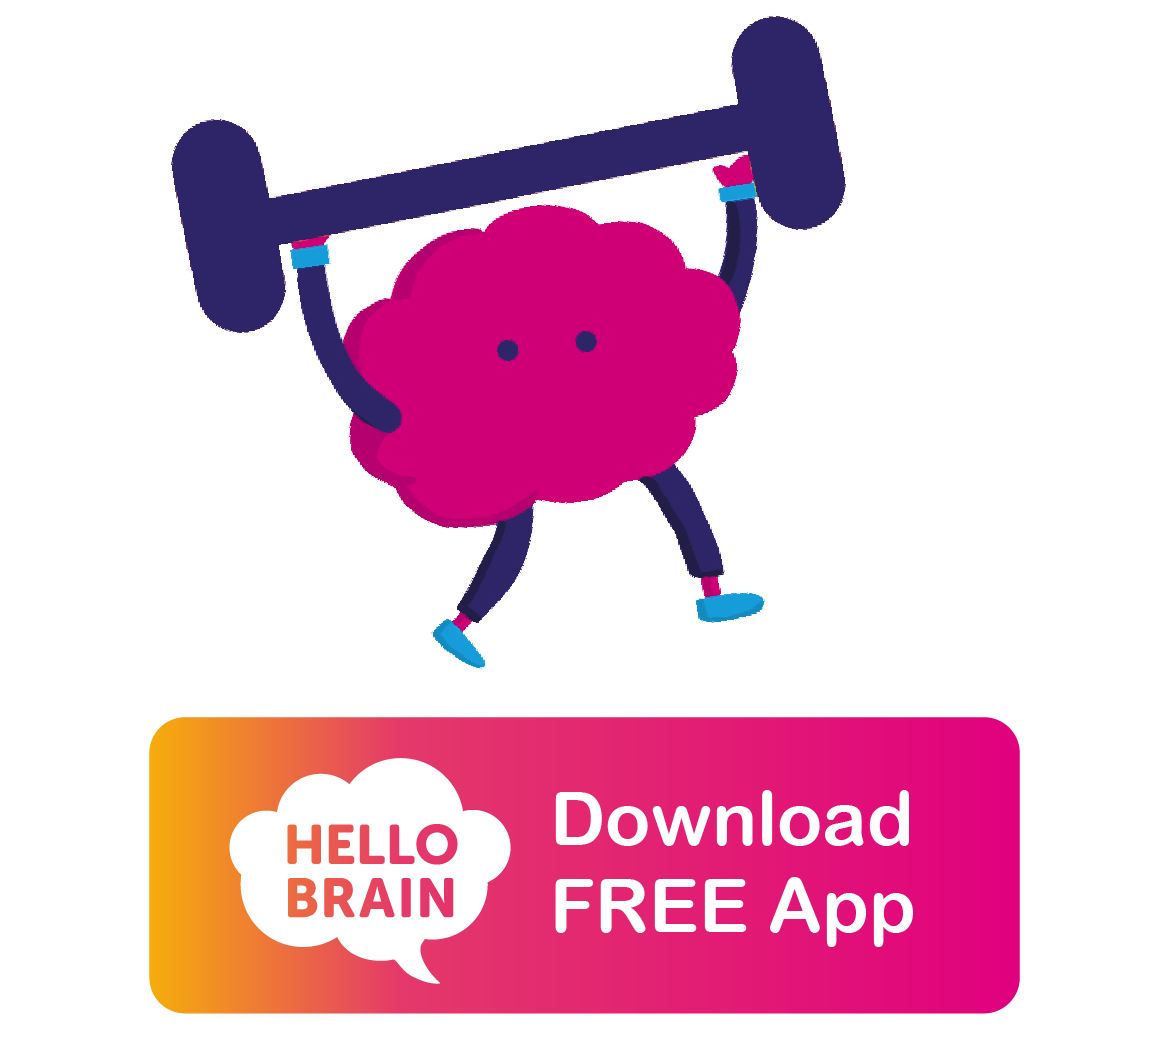 Hello Brain. Download FREE App